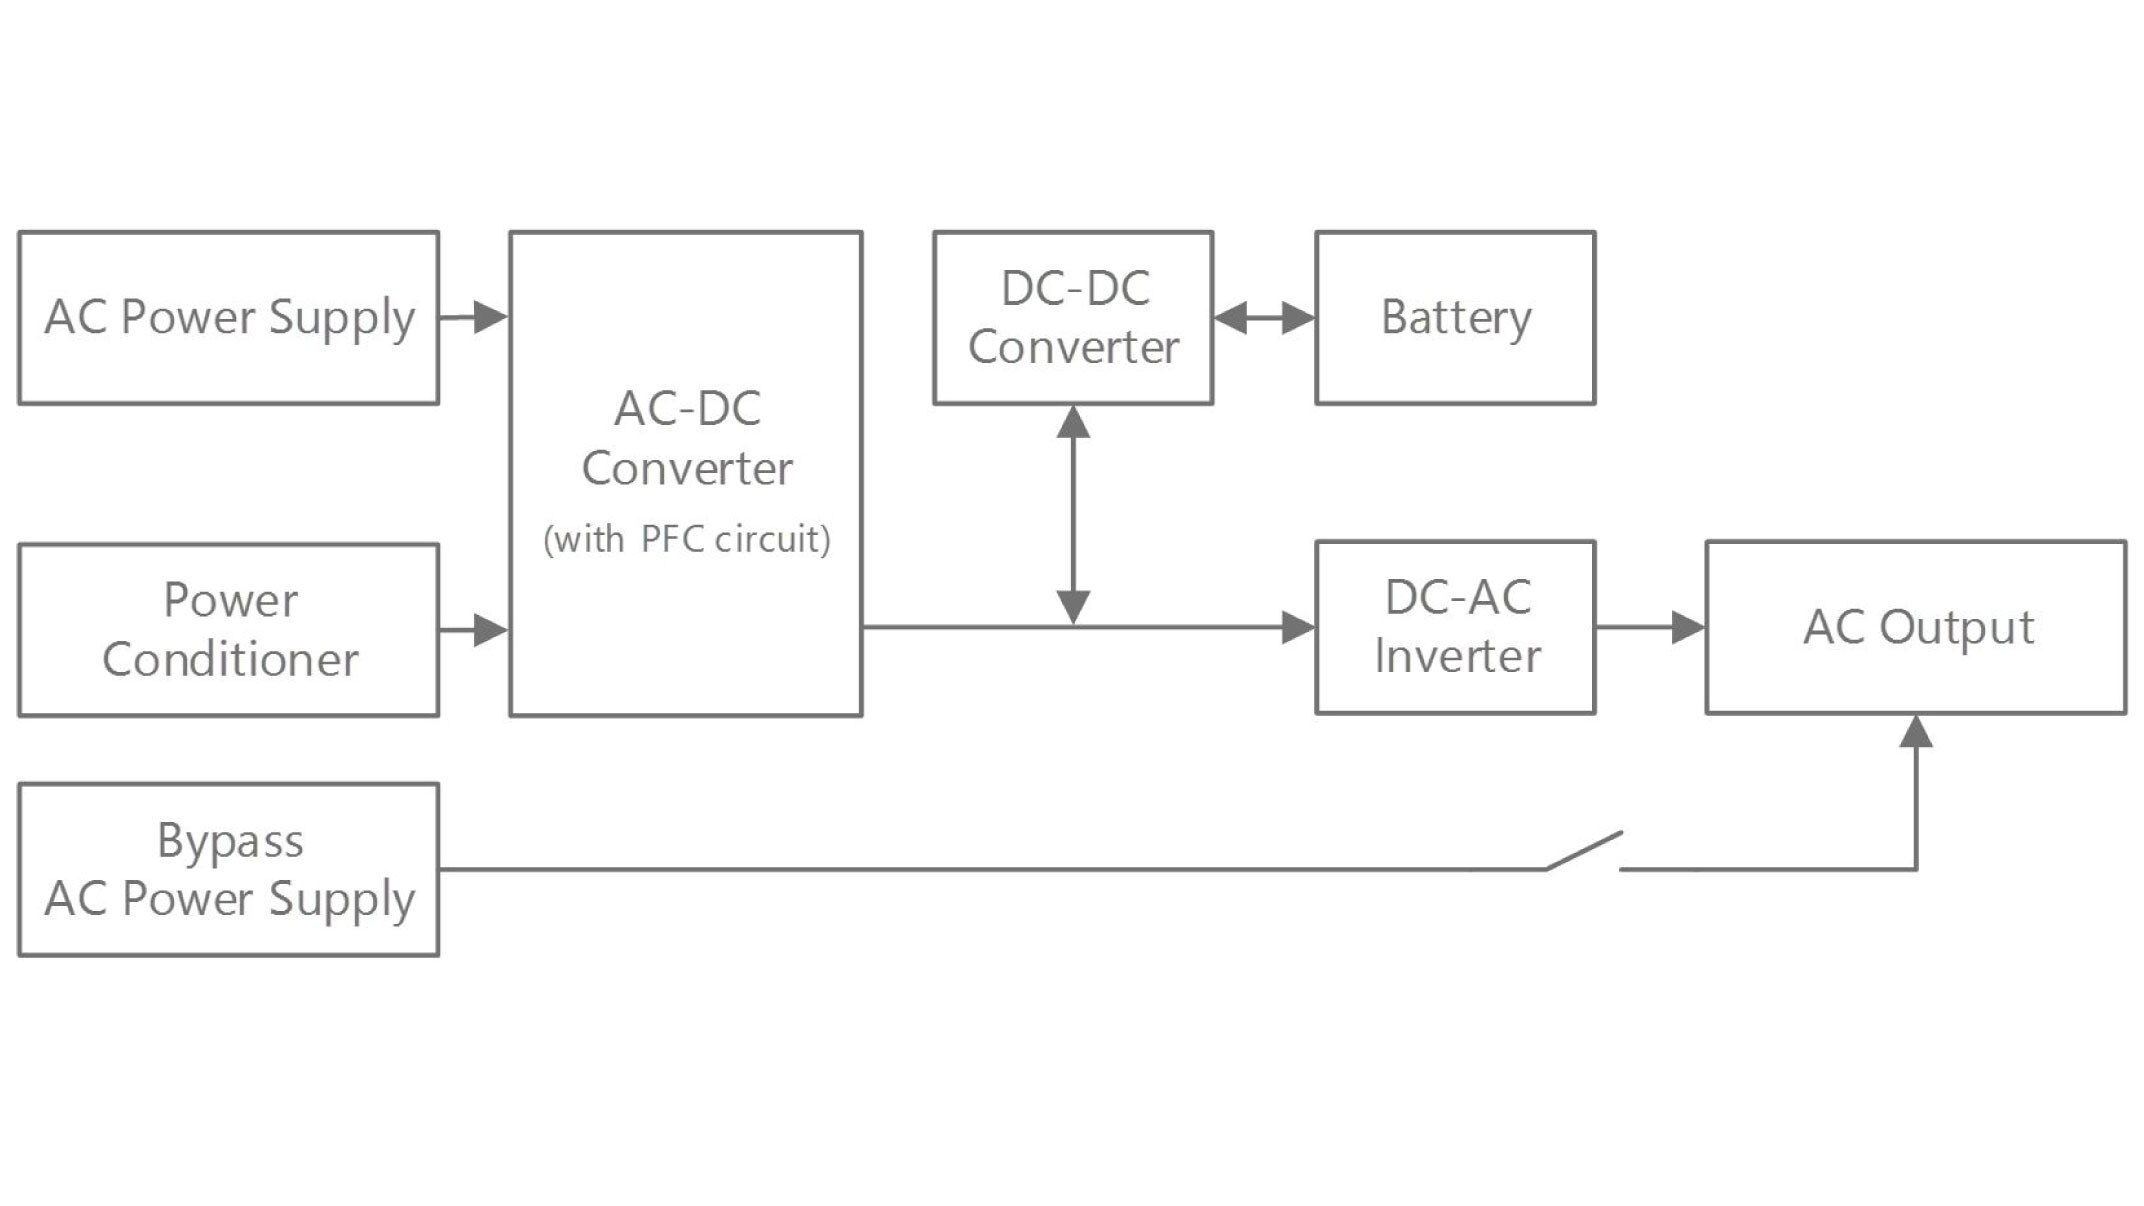 Overall block diagram (power system diagram)